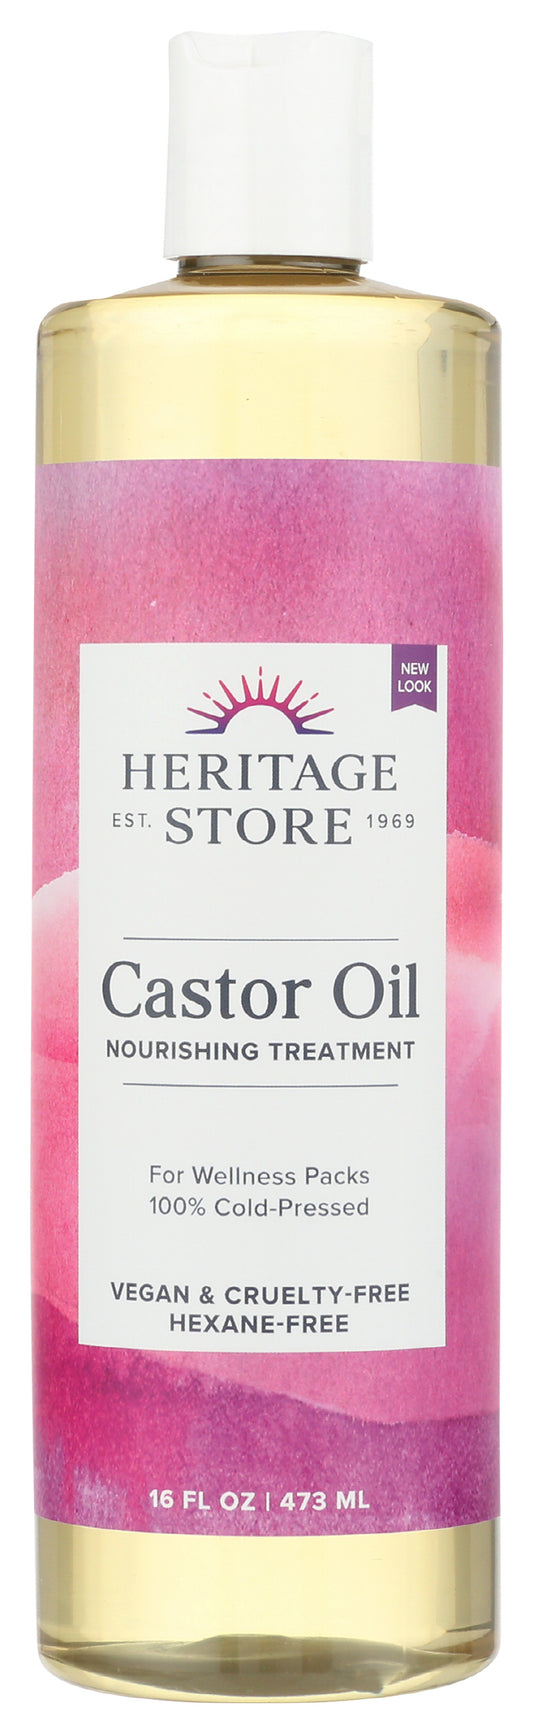 Heritage Store Castor Oil 16 fl oz